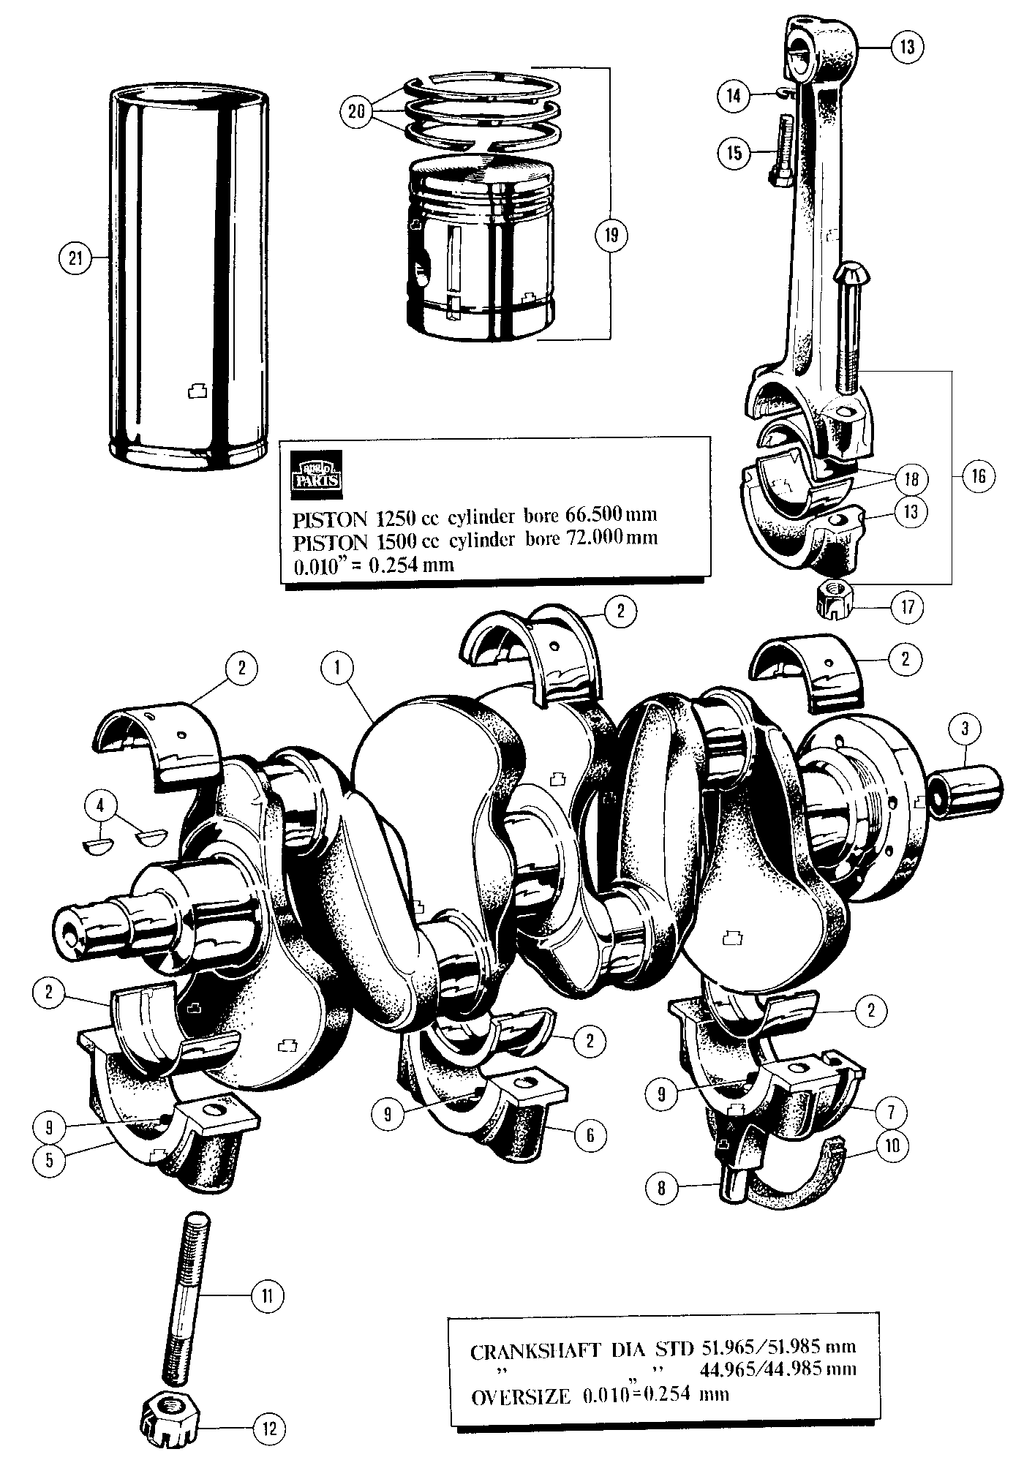 MGTD-TF 1949-1955 - Bearings | Webshop Anglo Parts - Crankshaft & pistons - 1